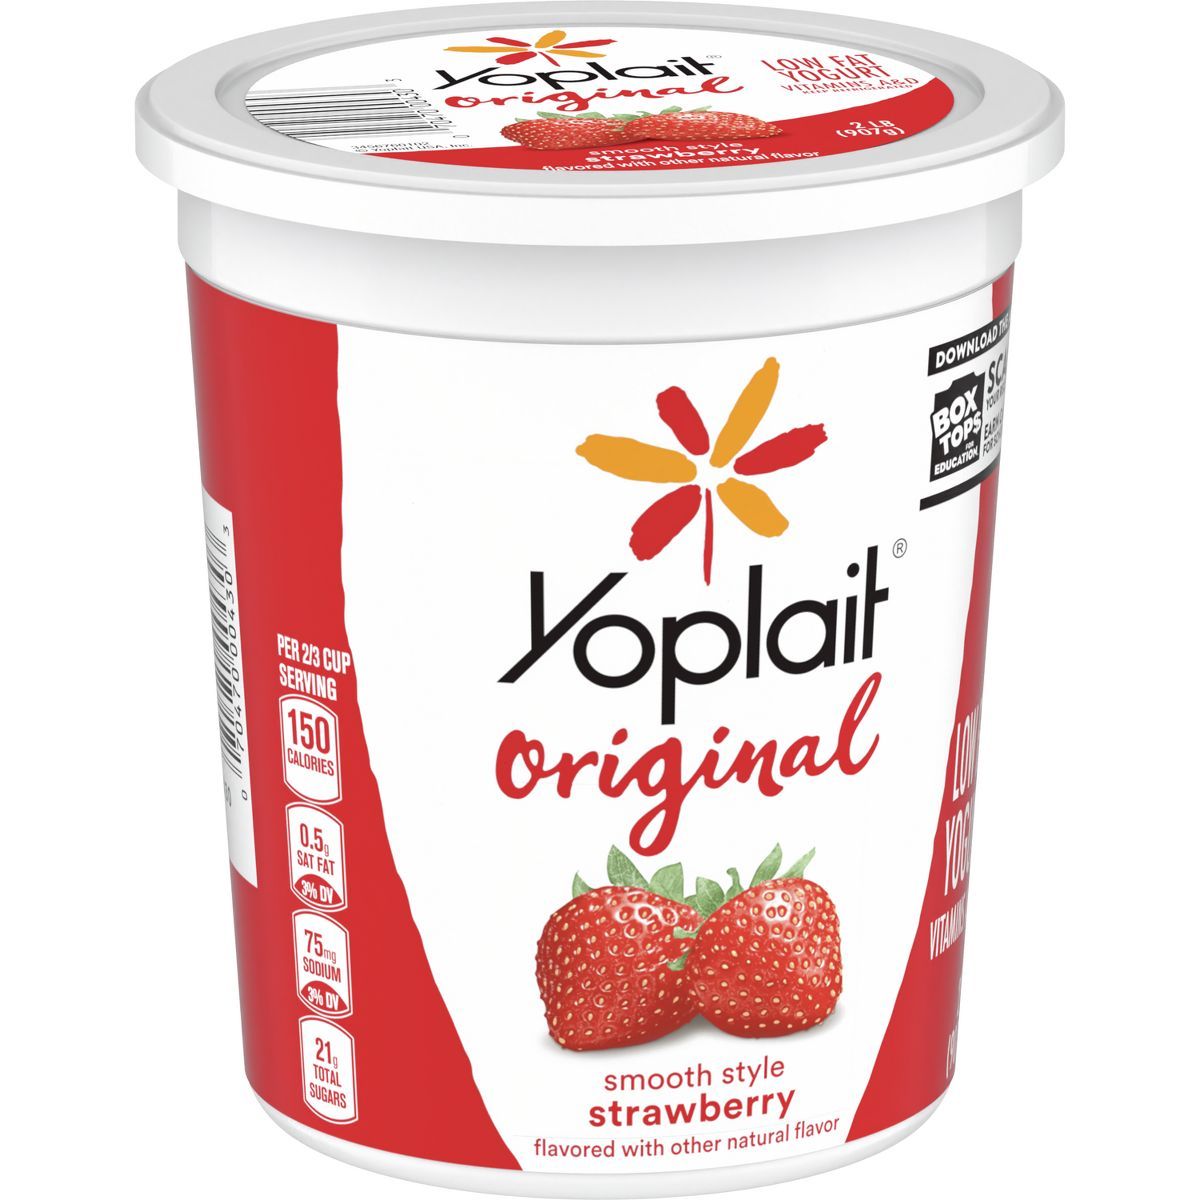 Yoplait Original Strawberry Yogurt - 32oz | Target